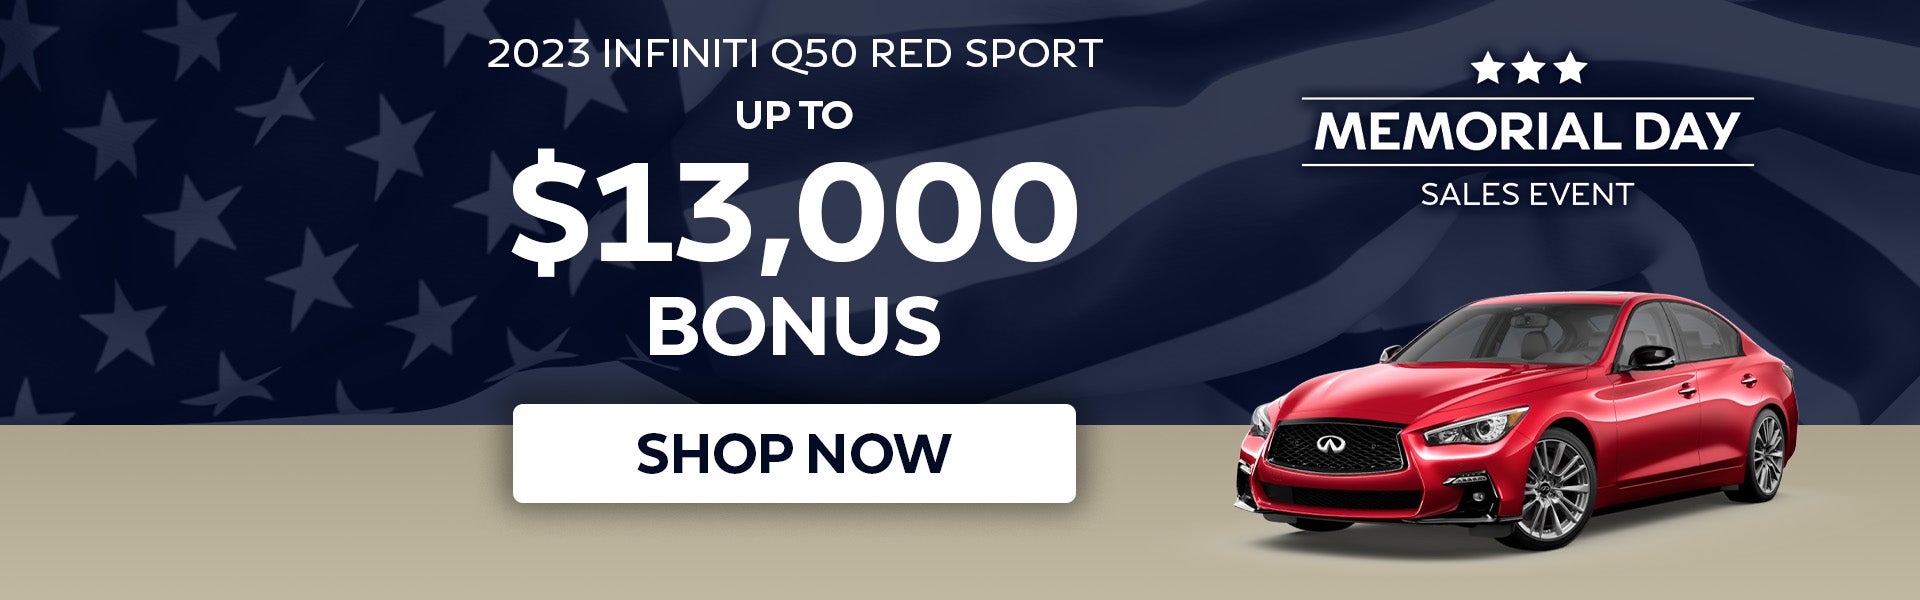 2023 Infiniti Q50 Red Sport